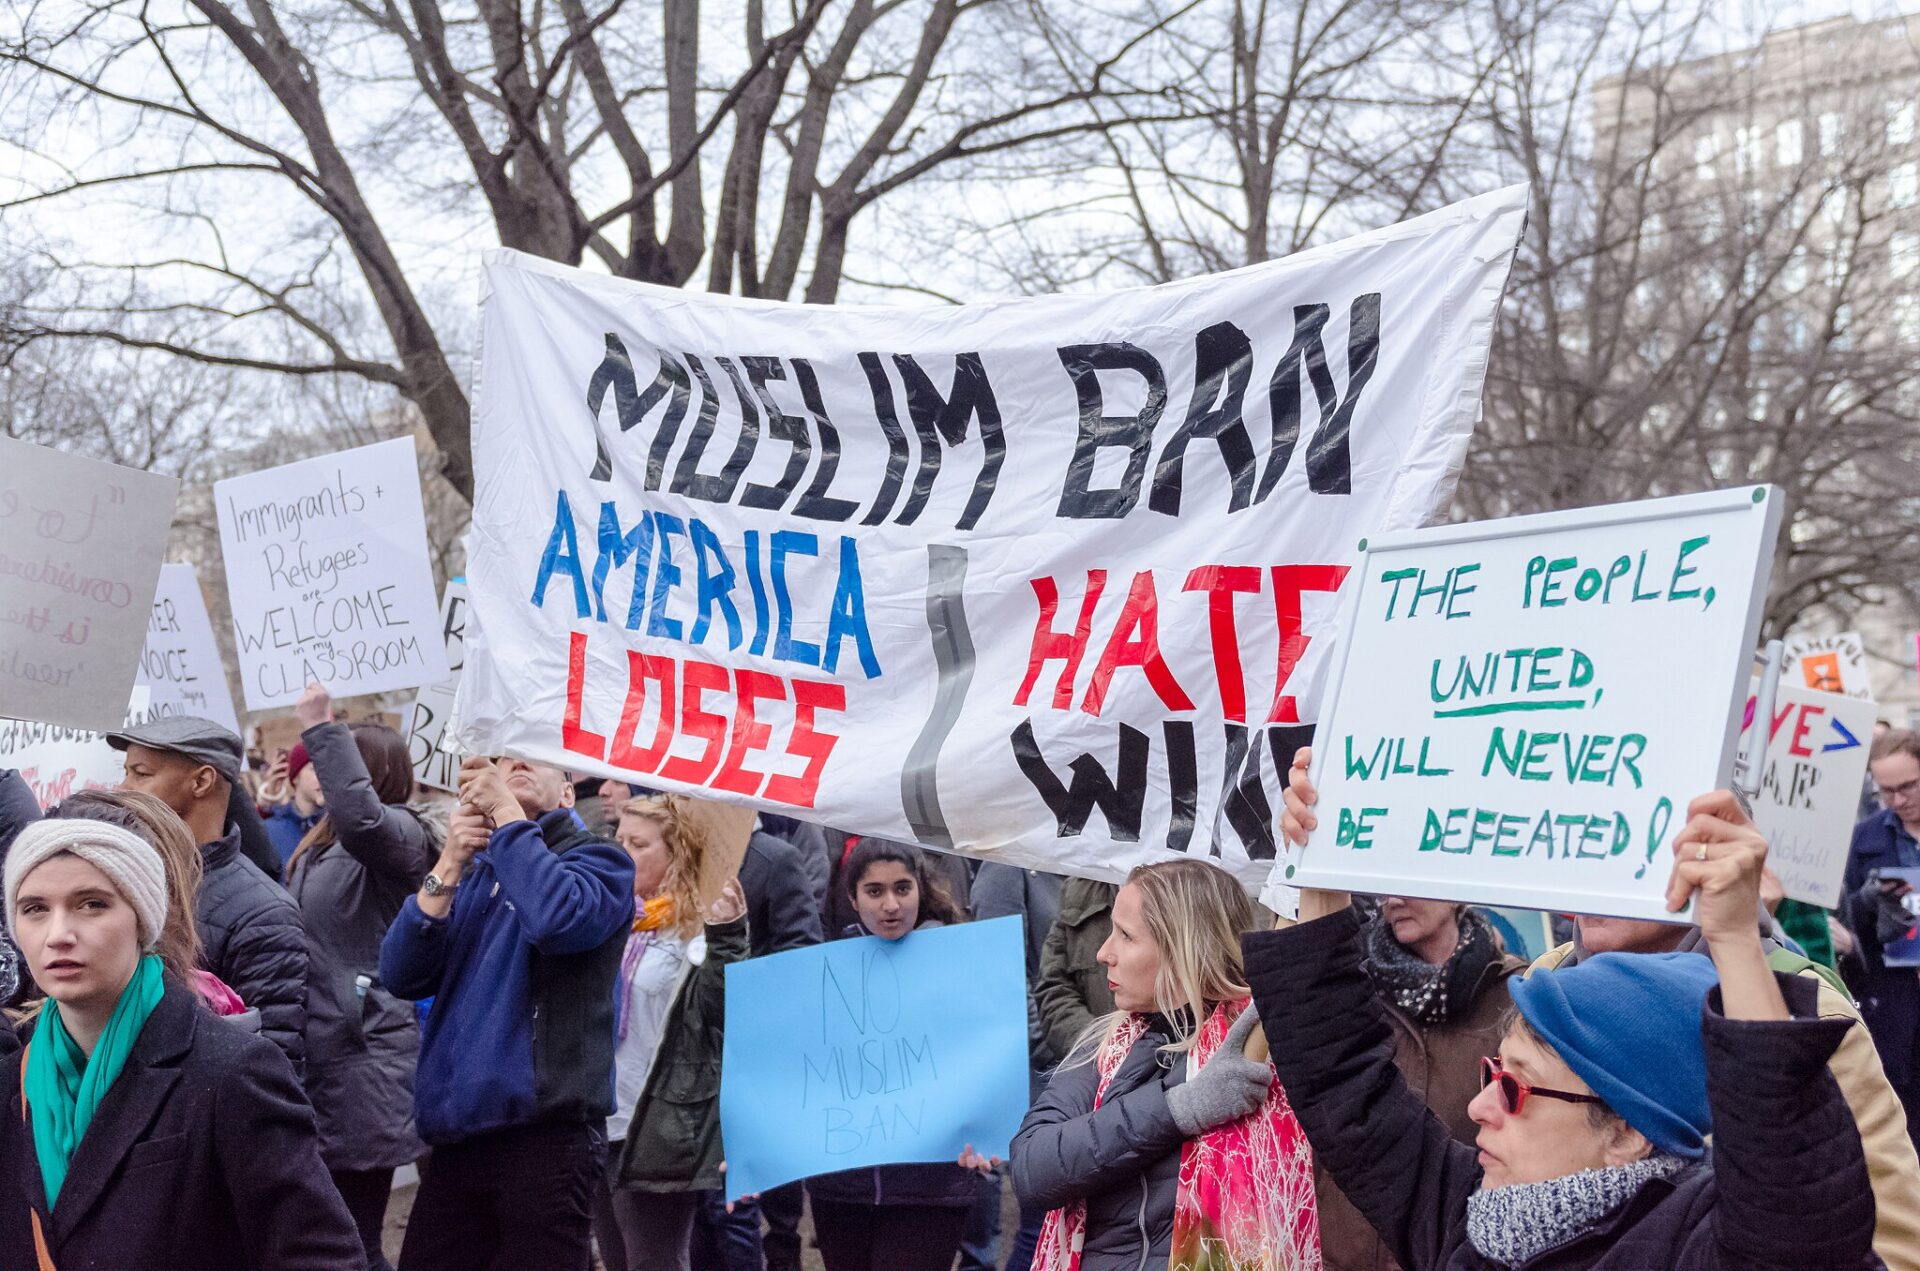 A rally against Trump's Muslim ban near the White House on January 29, 2017 (Kyle Tsui via Wikimedia Commons)